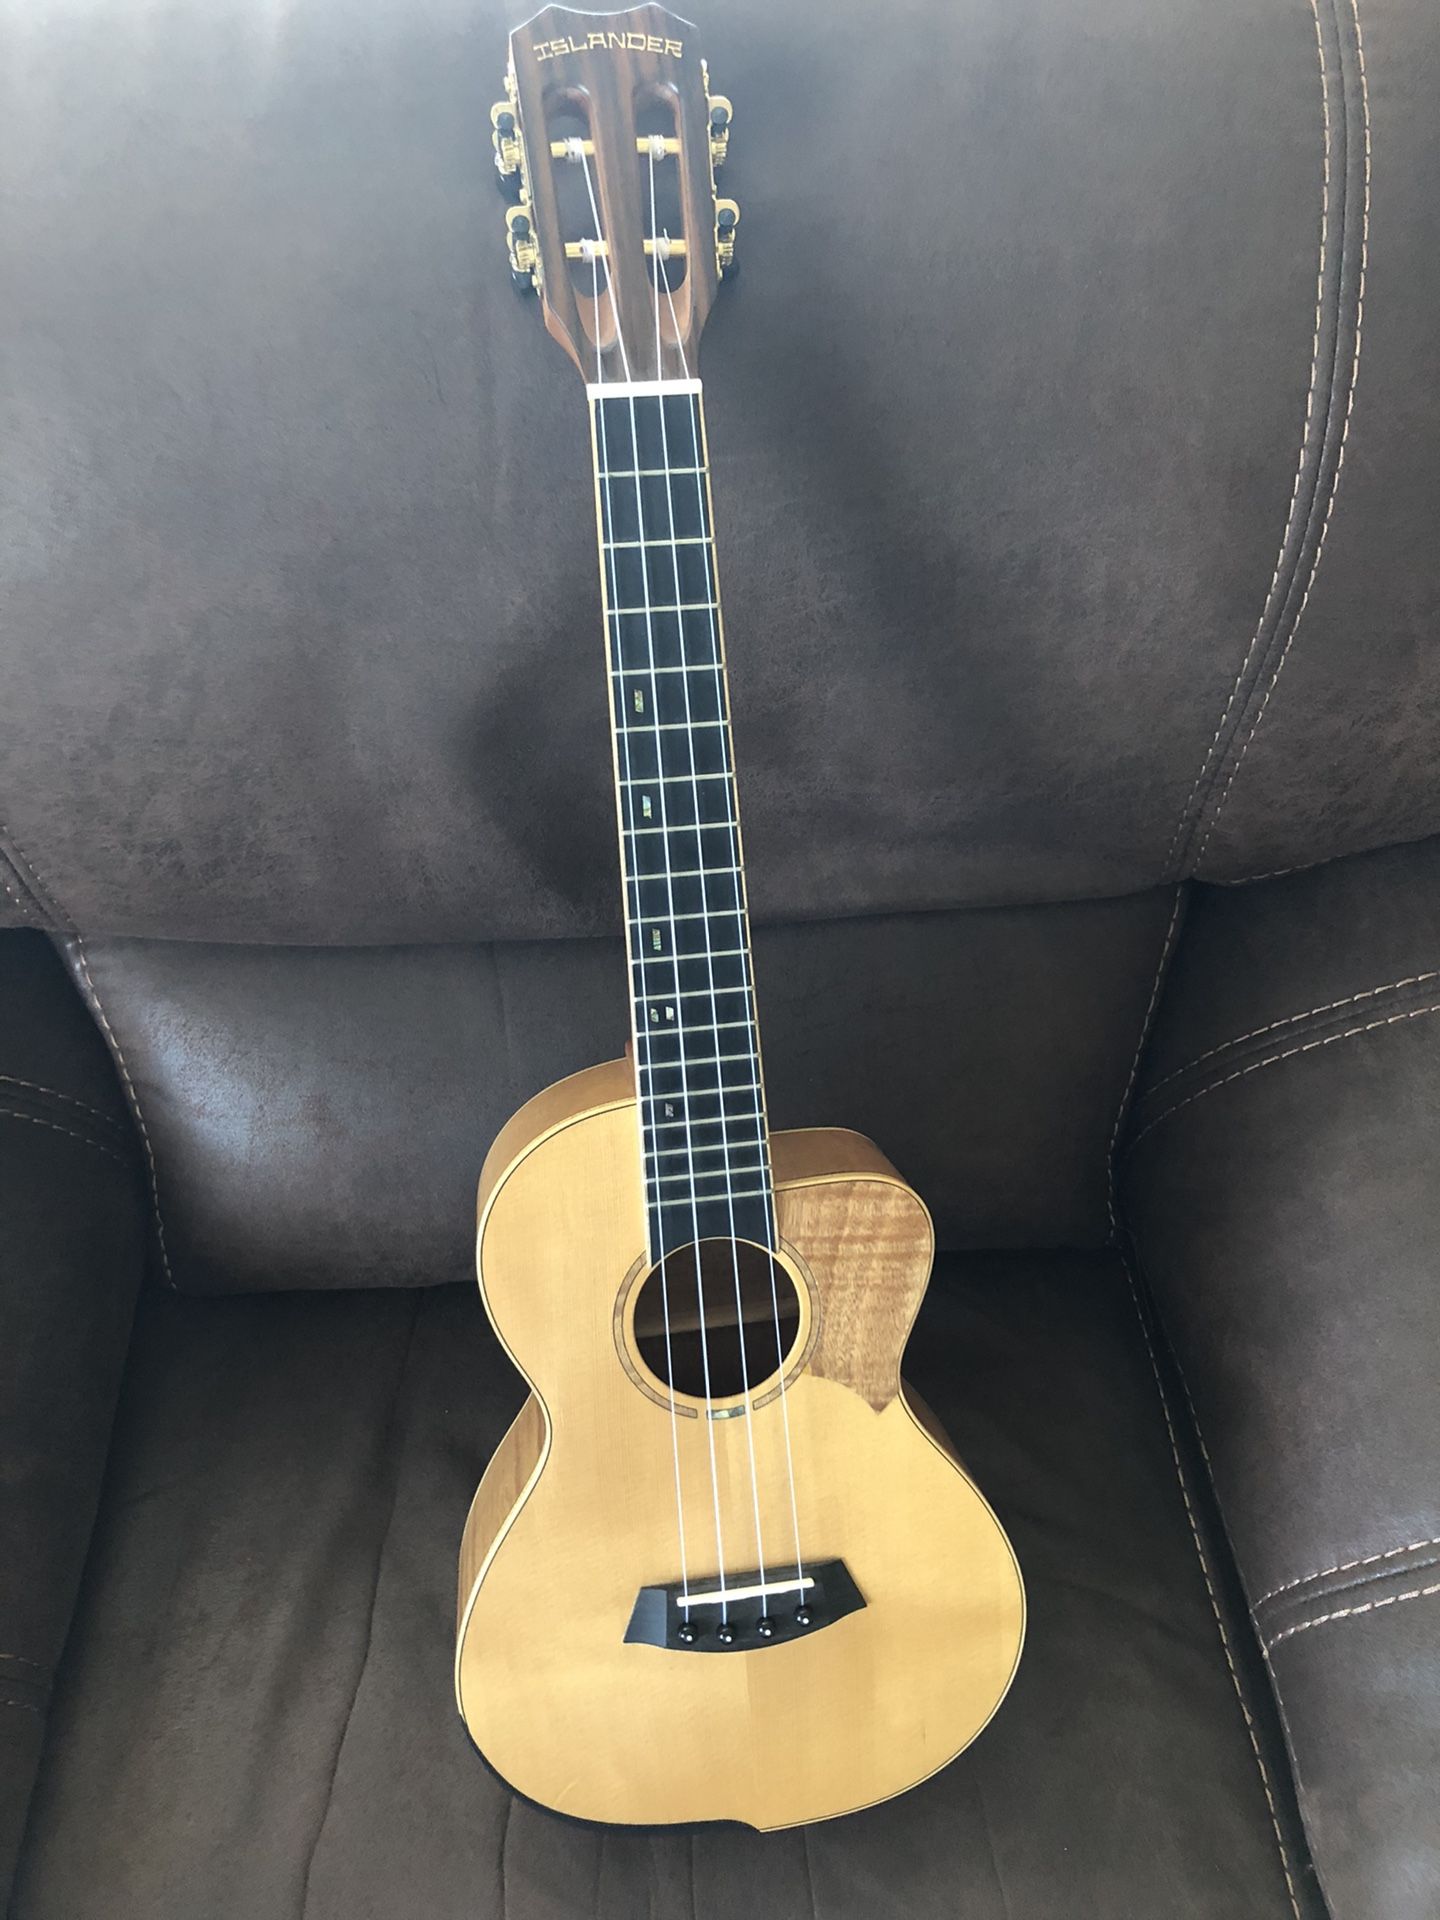 Islander tenor ukulele